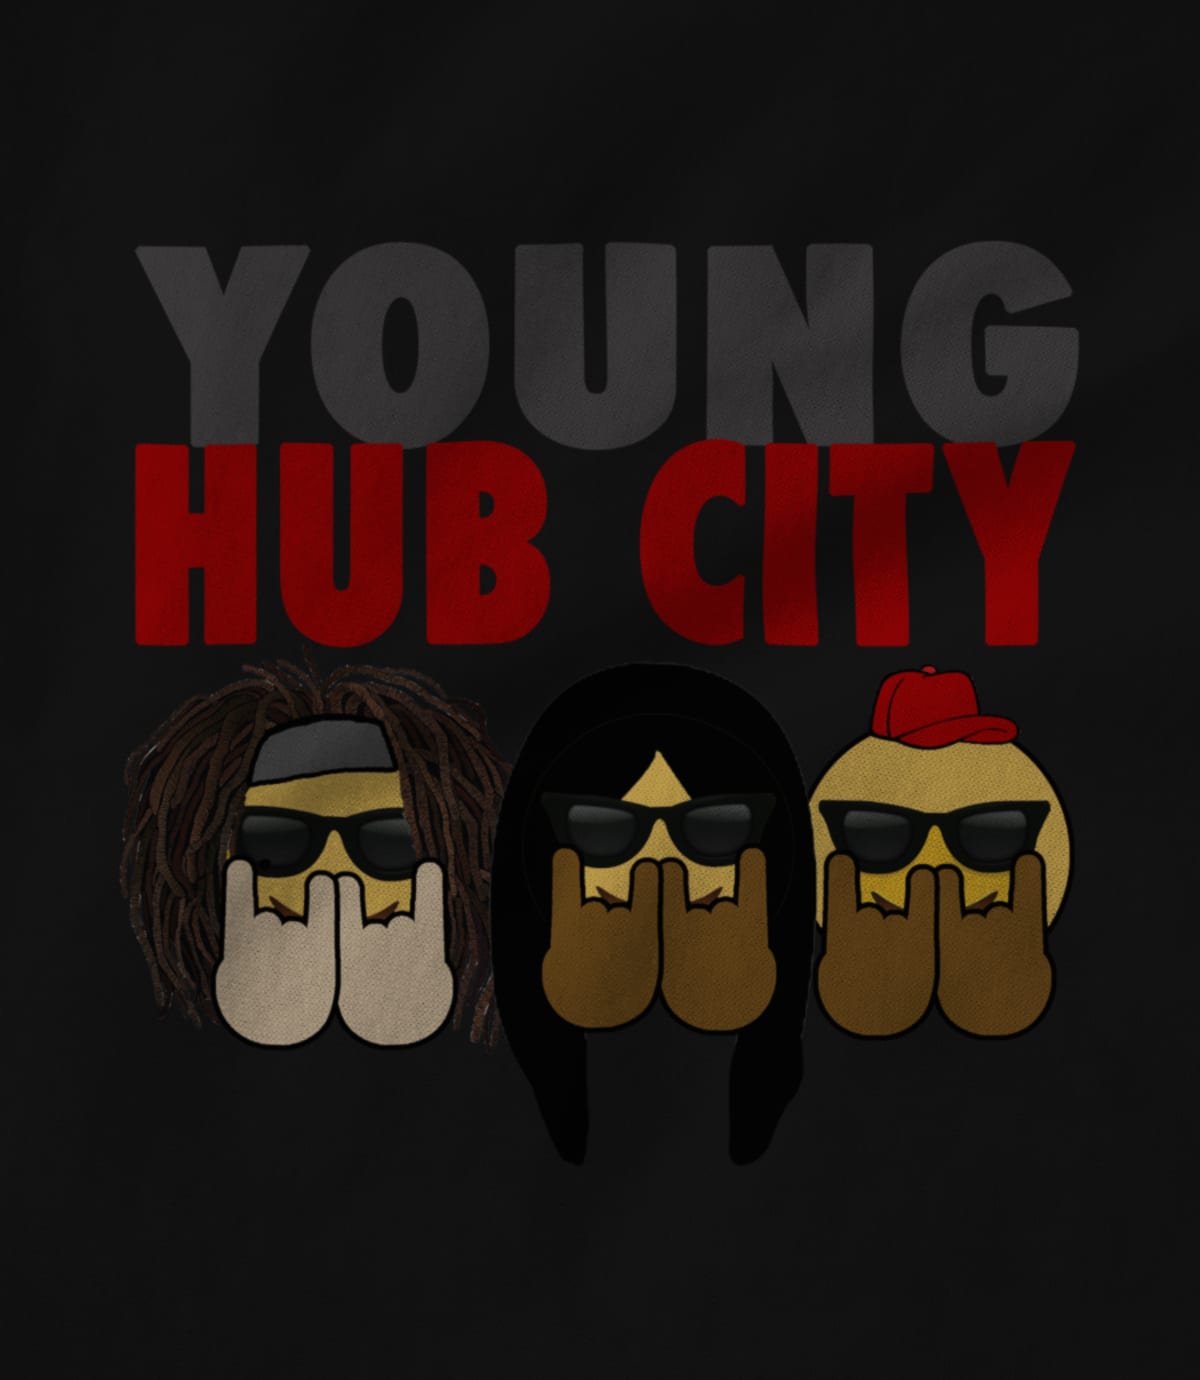 Young Hub City